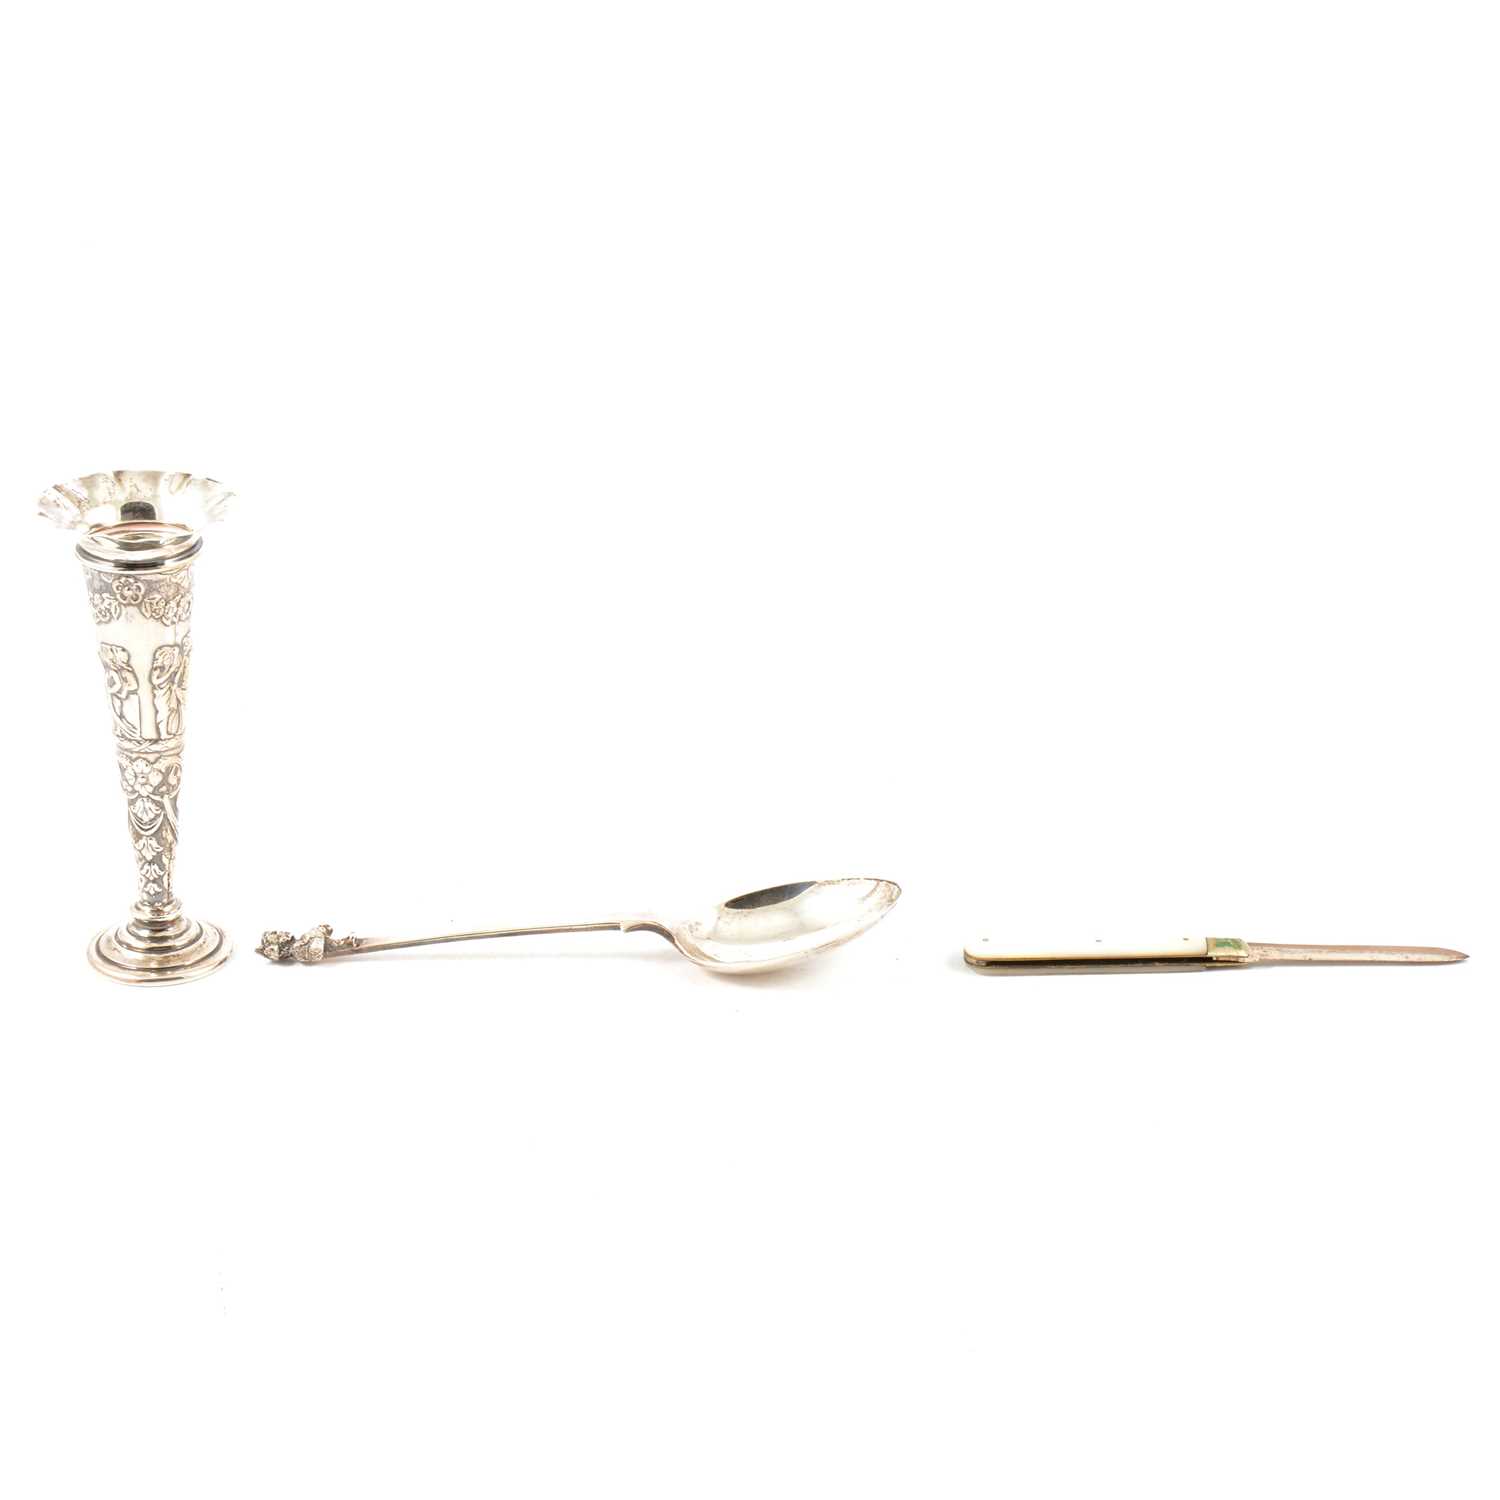 Silver bud vase, Lincoln Imp spoon, fruit knife.